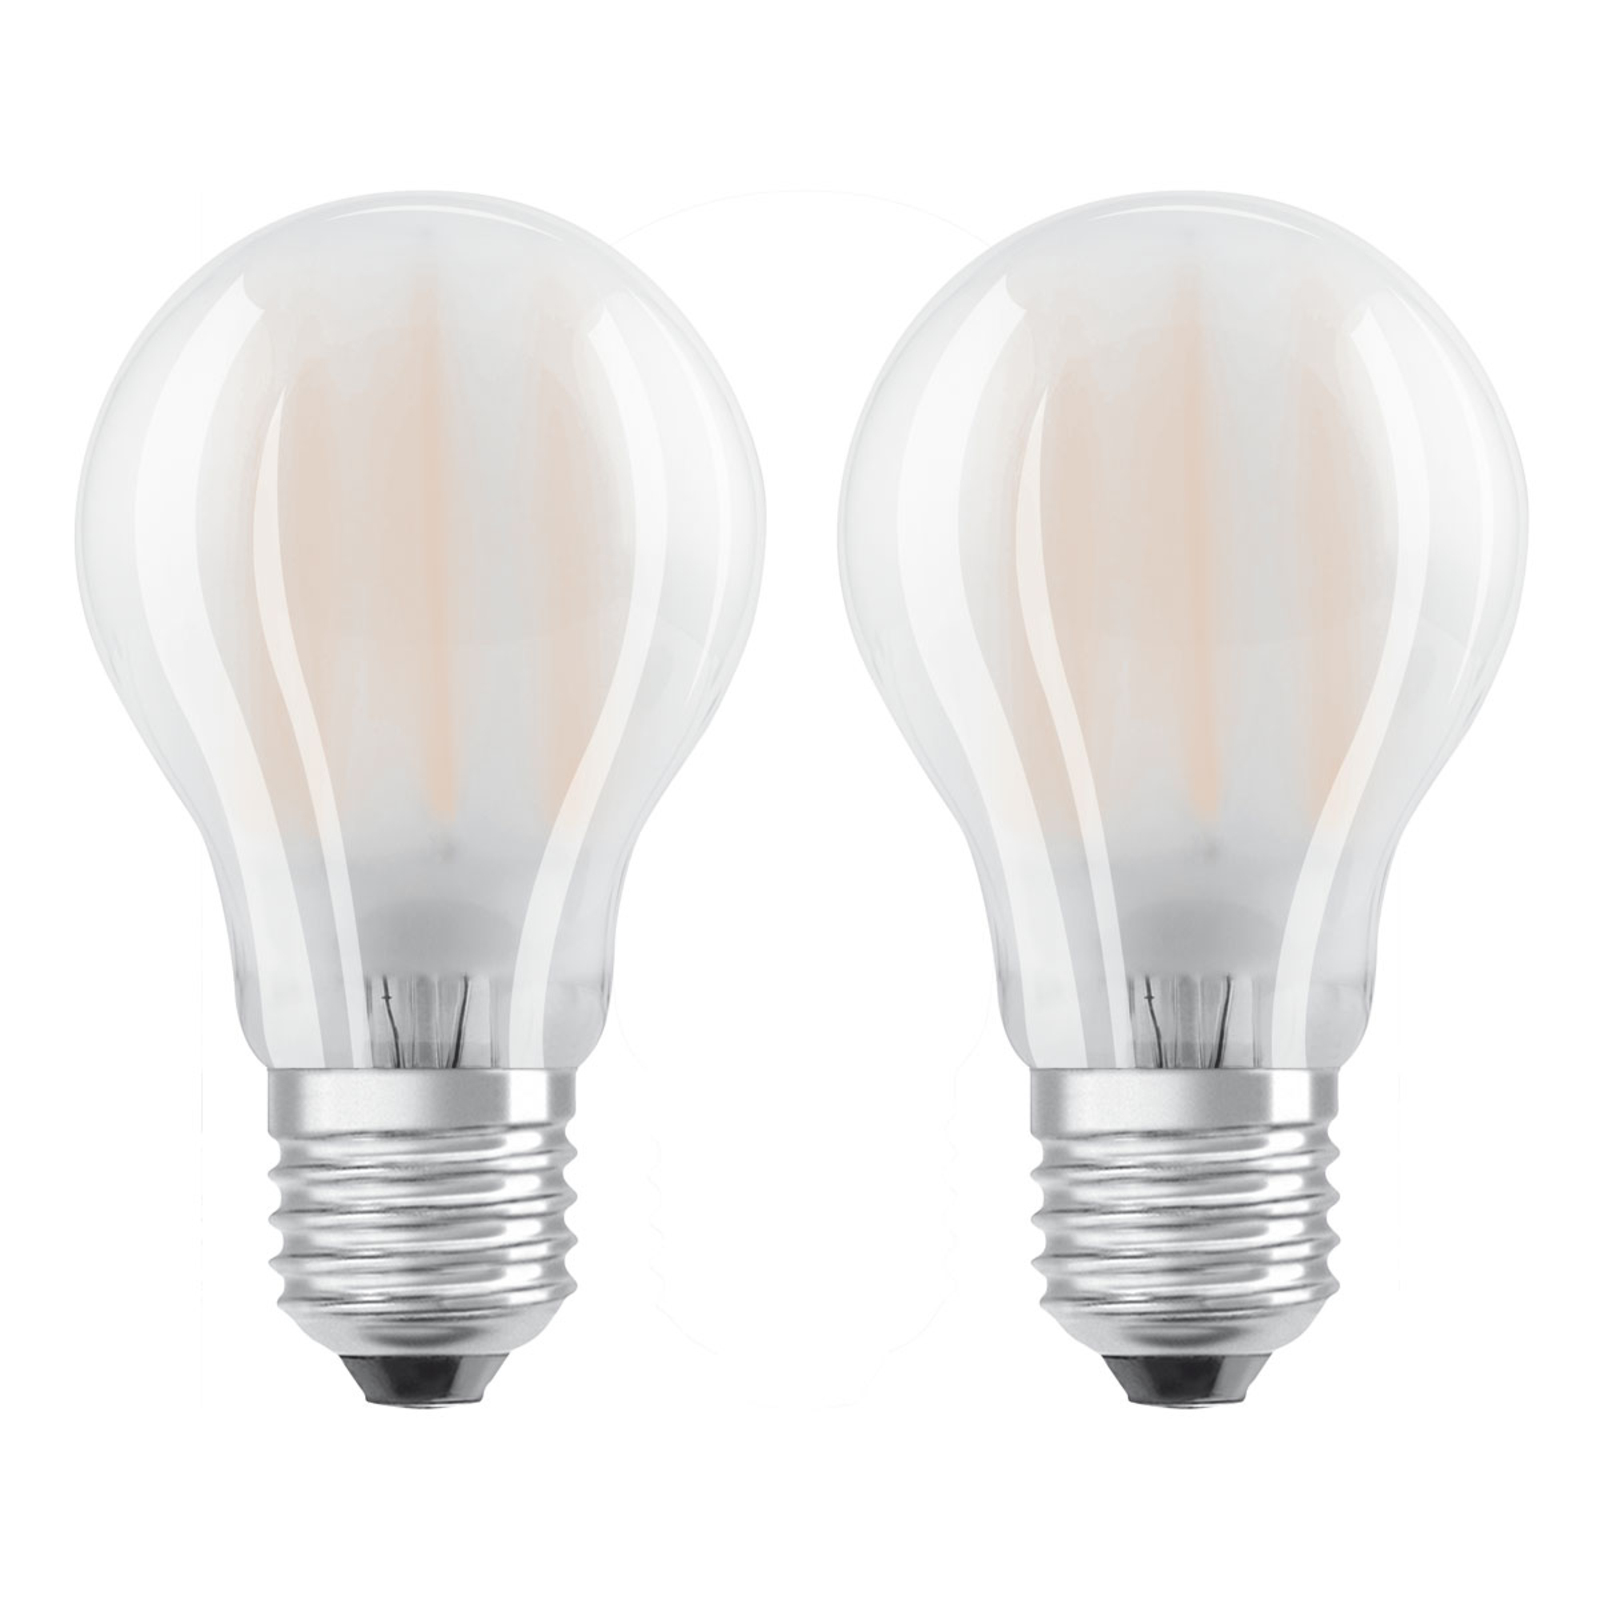 Portret duisternis Gelukkig OSRAM LED lamp E27 4W warmwit 2 per set | Lampen24.nl